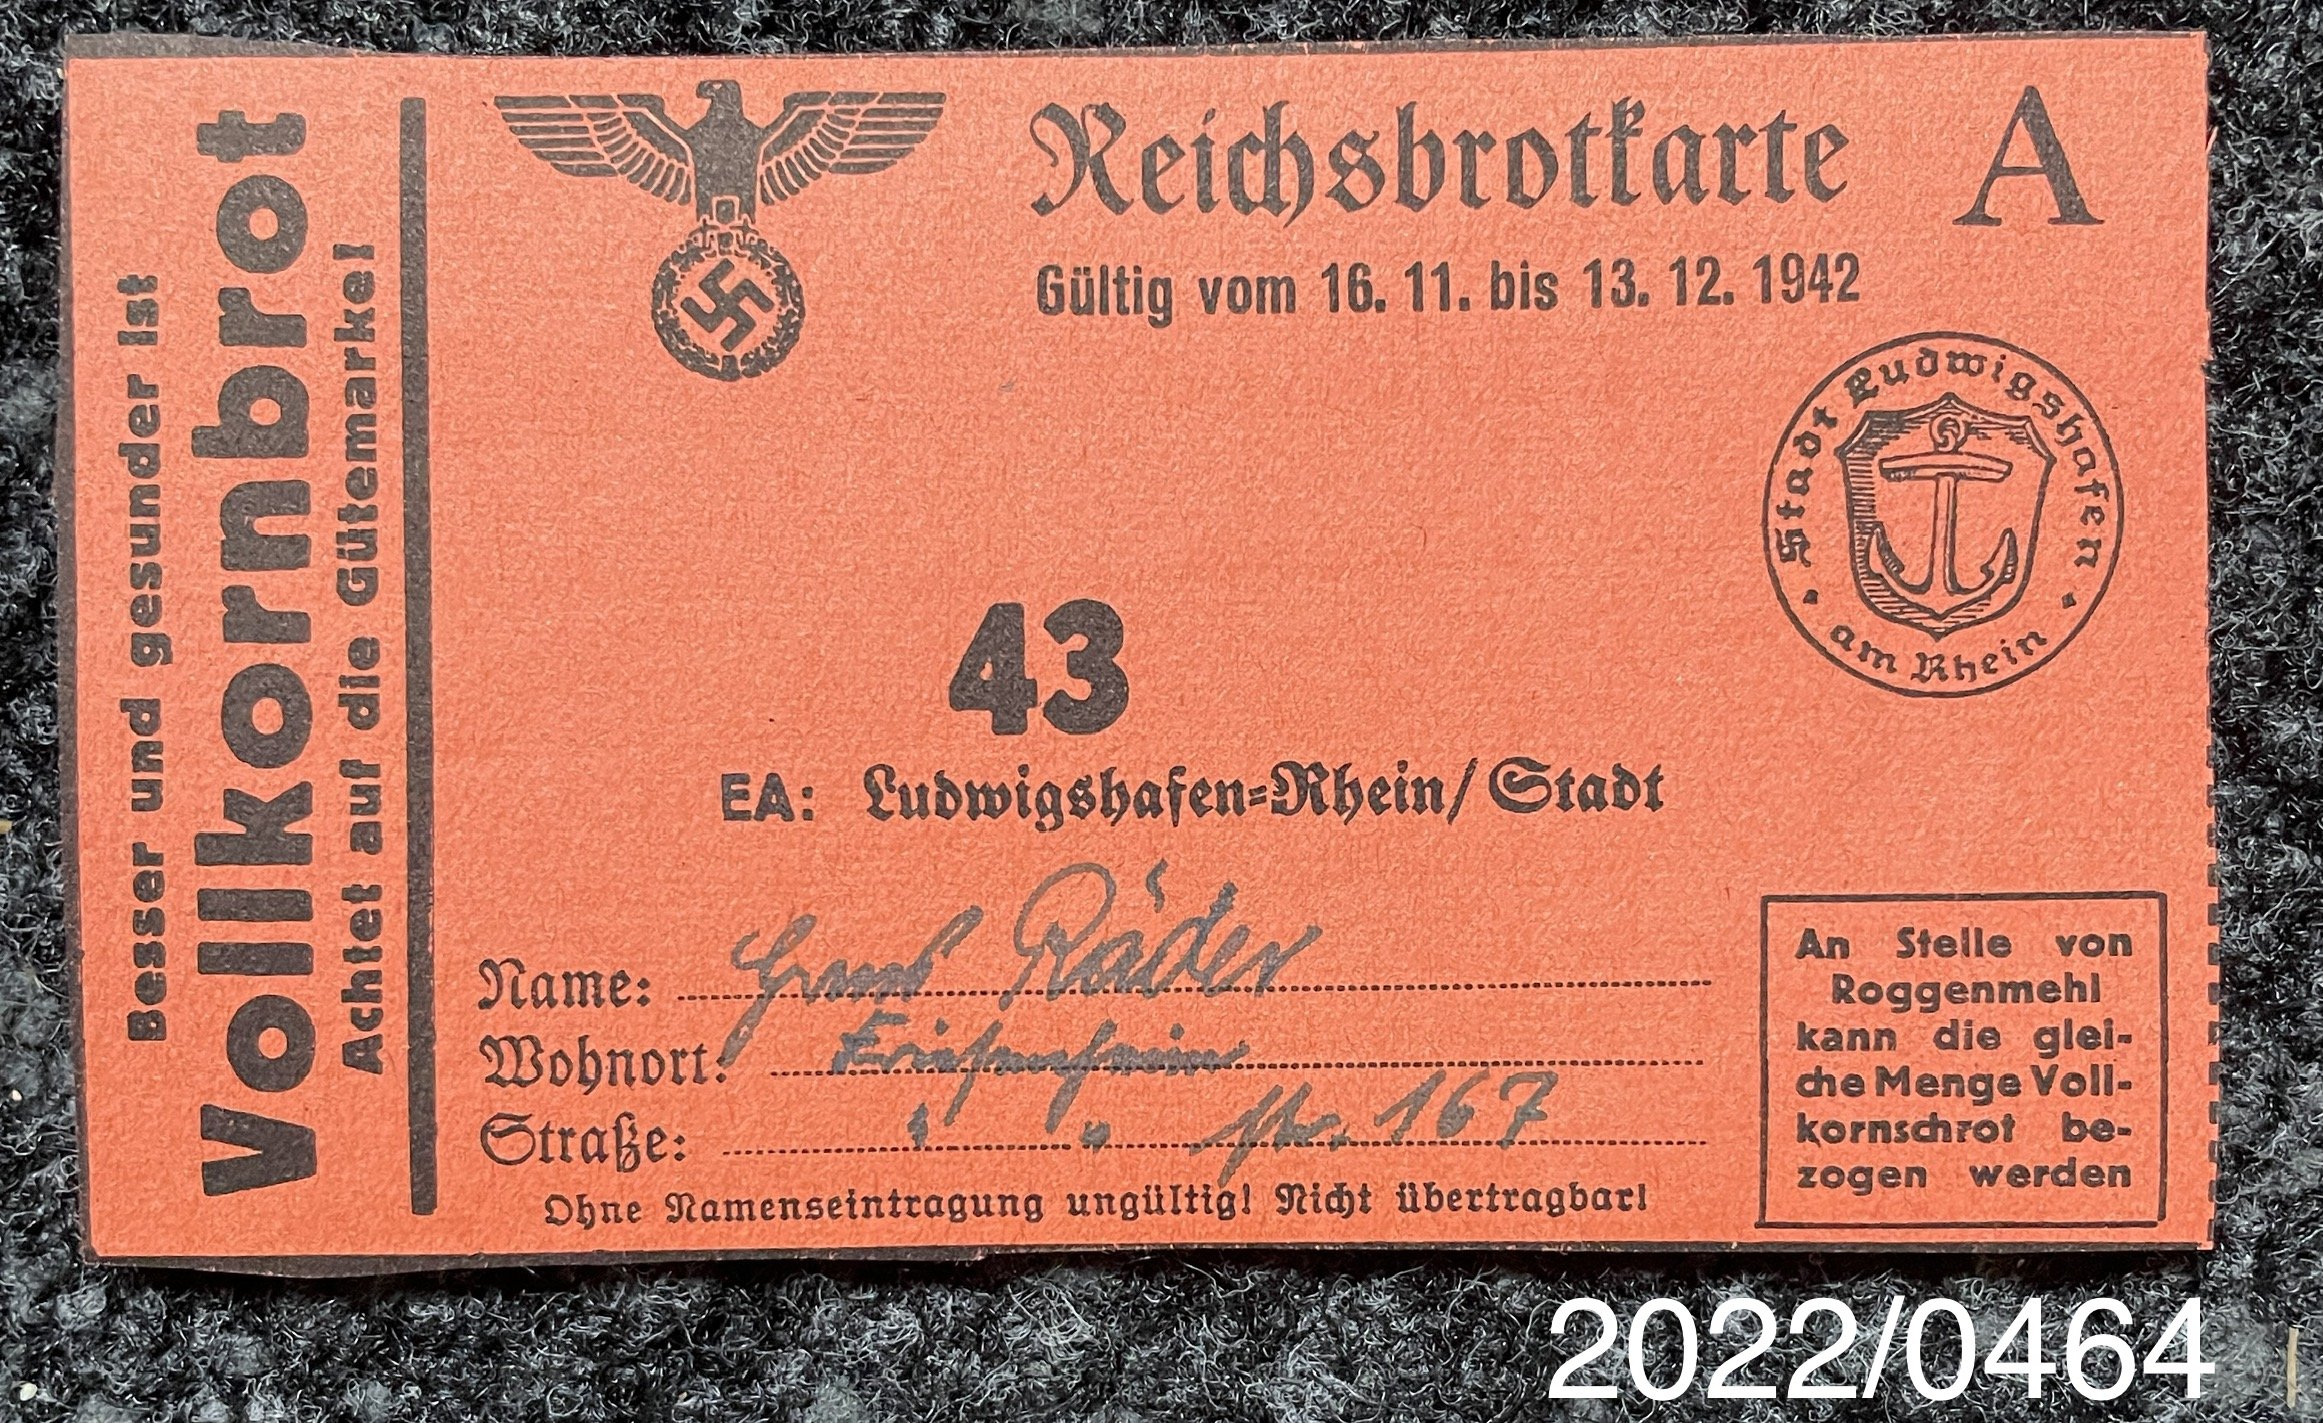 Reichsbrotkarte A Nr. 43 Hans Räder (Stadtmuseum Bad Dürkheim im Kulturzentrum Haus Catoir CC BY-NC-SA)